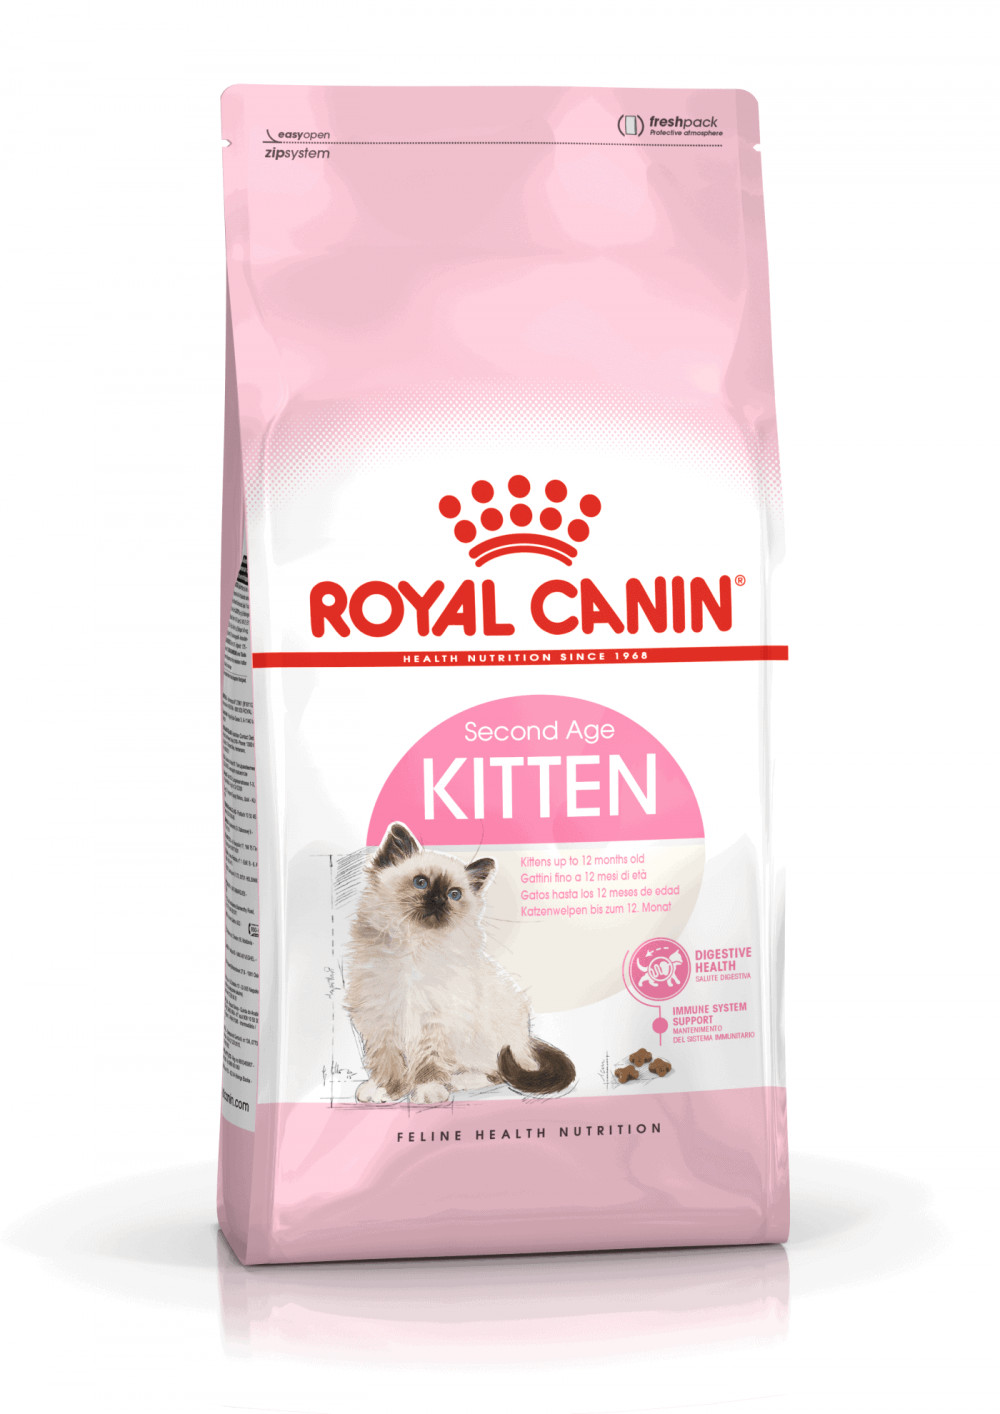 Royal Canin Kitten macskatáp 400 g